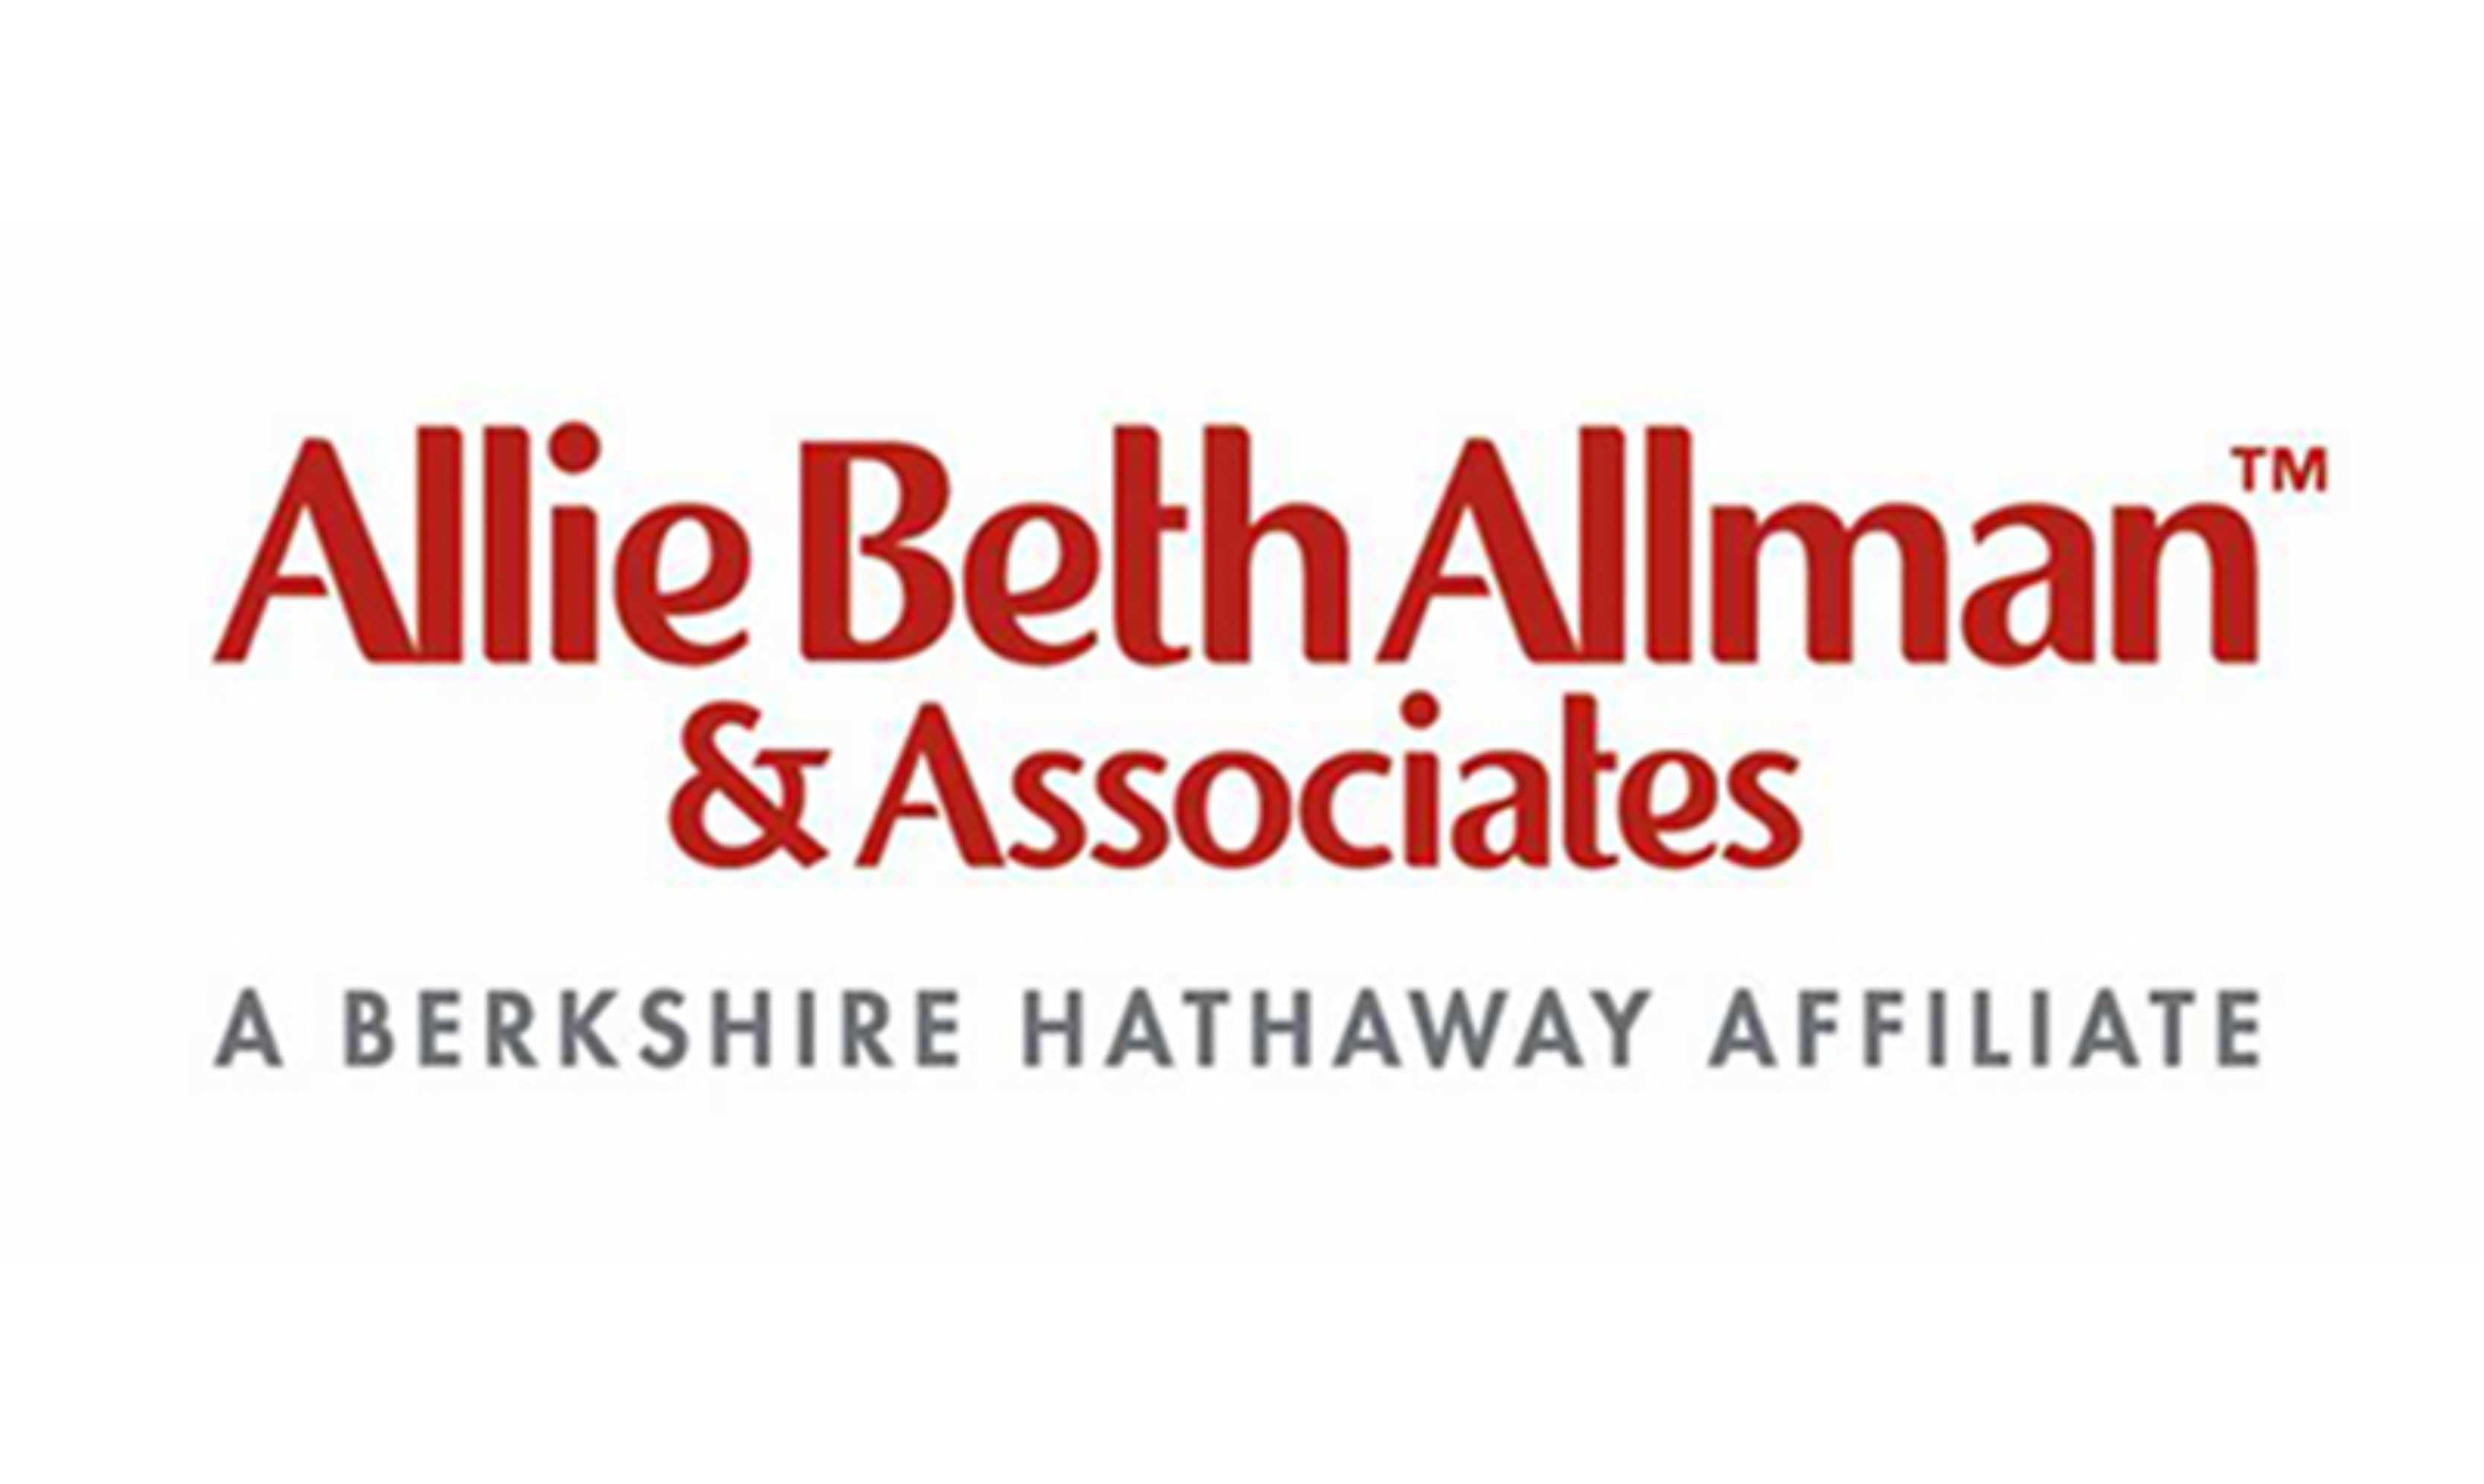 Allie Beth Allman & Associates